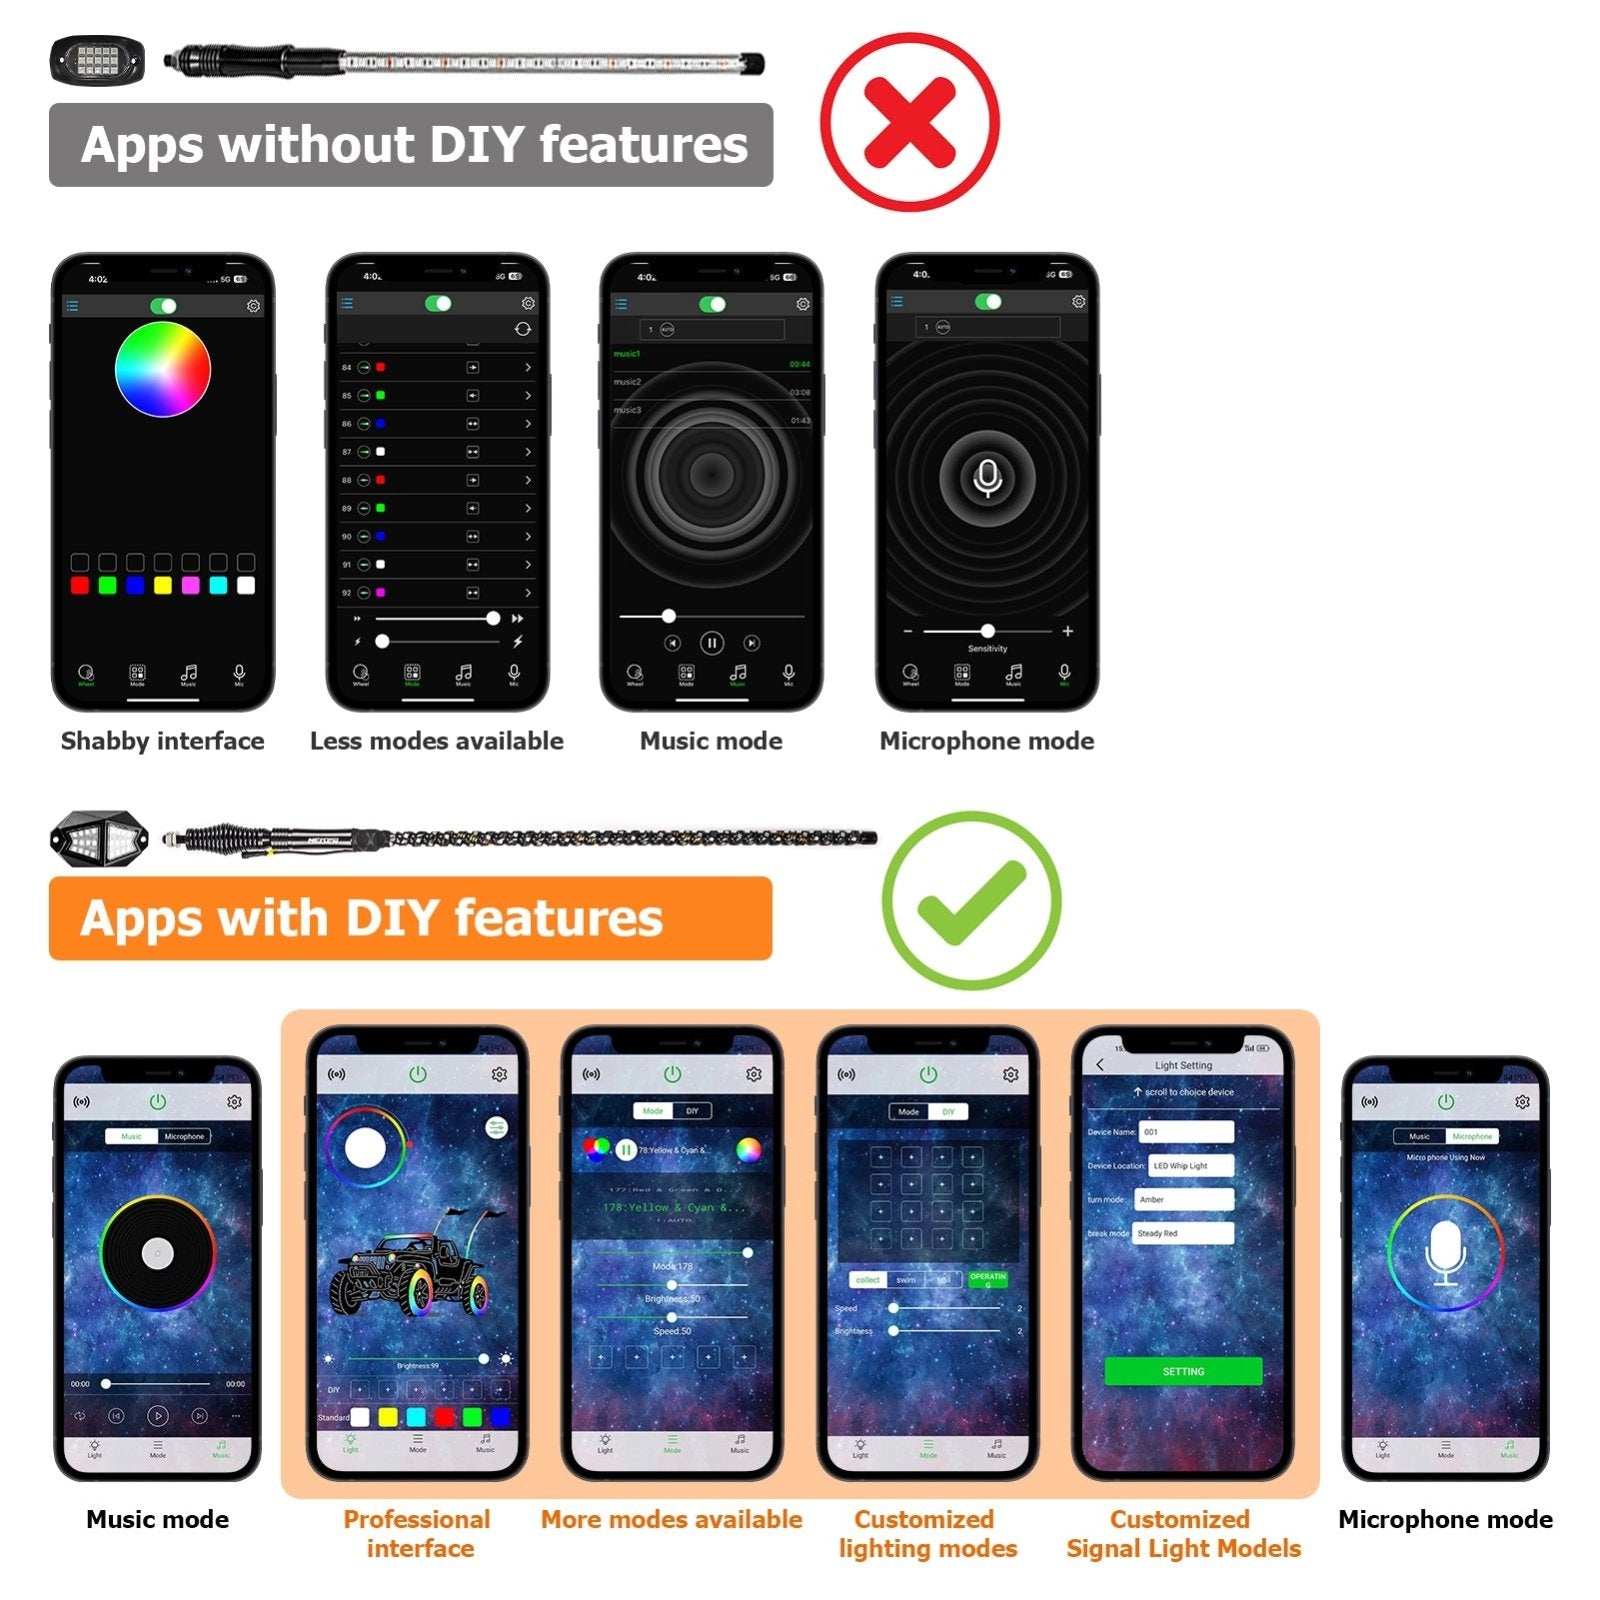 3FT RGB LED Whip Lights & Rock Lights Combo Kit for UTV ATV | Wireless Remote Control & Bluetooth App Control - Weisen